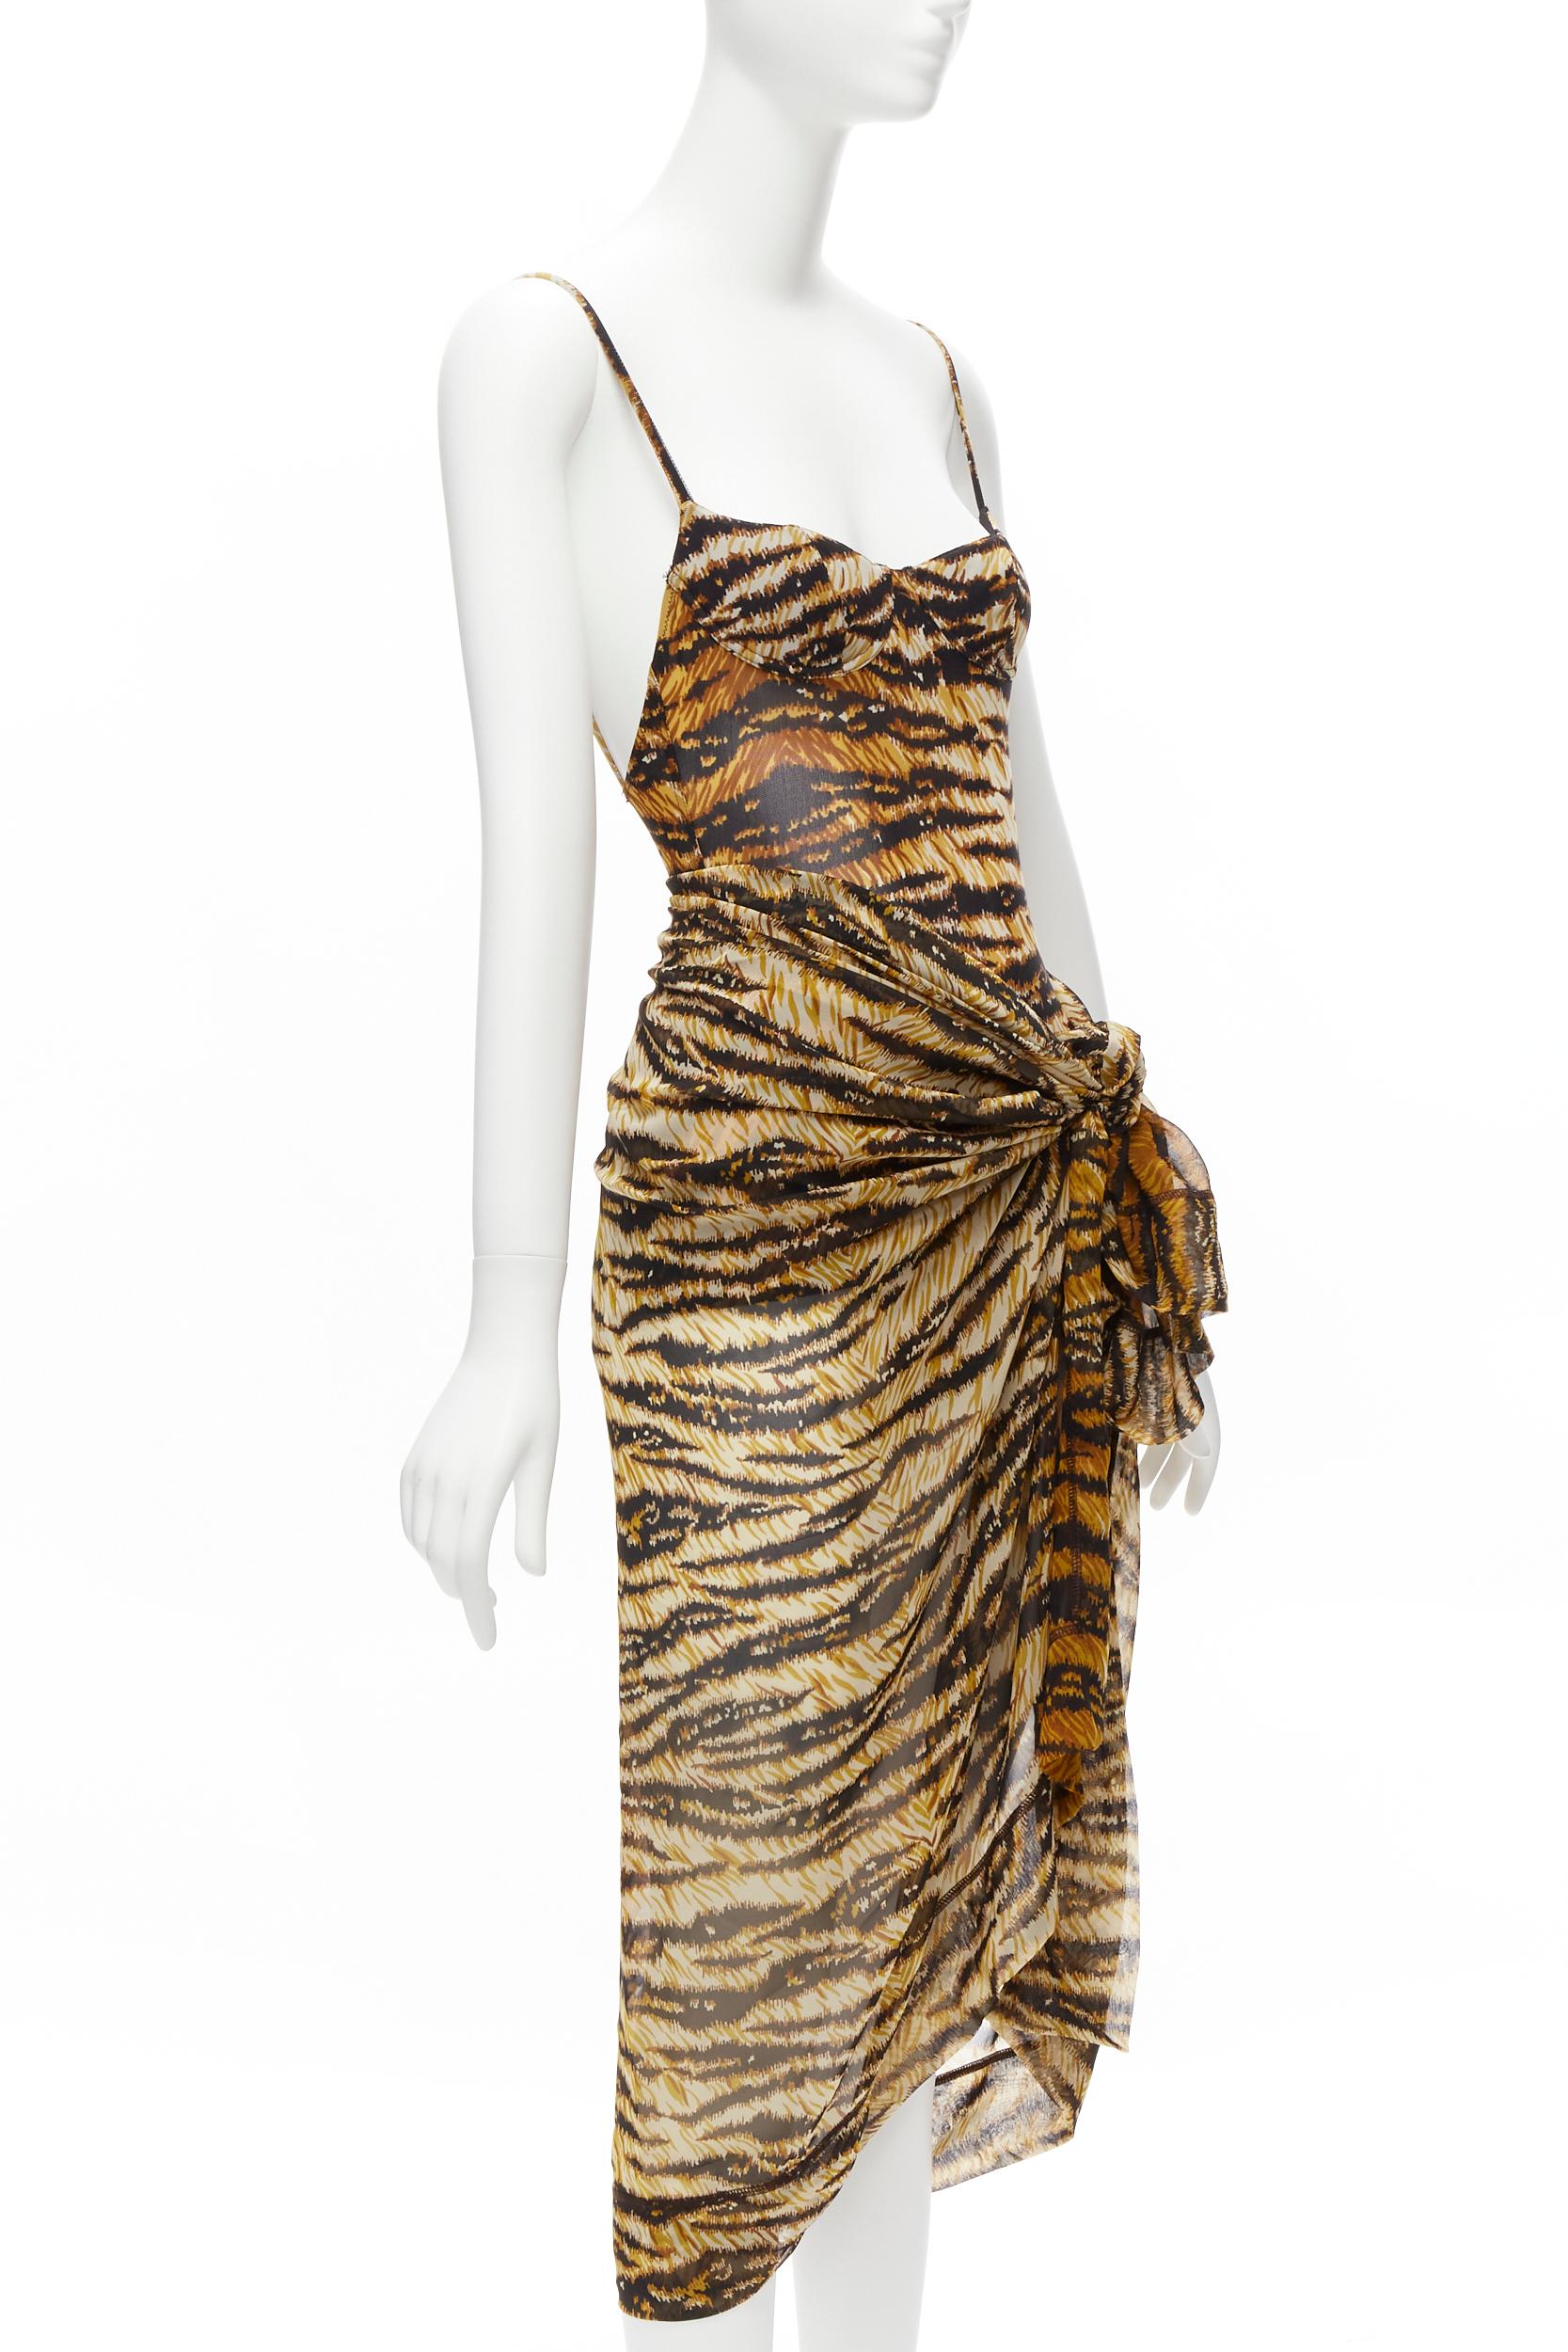 DOLCE GABBANA MARE Vintage tiger print mesh bustier bodysuit wrap skirt scarf S For Sale 5